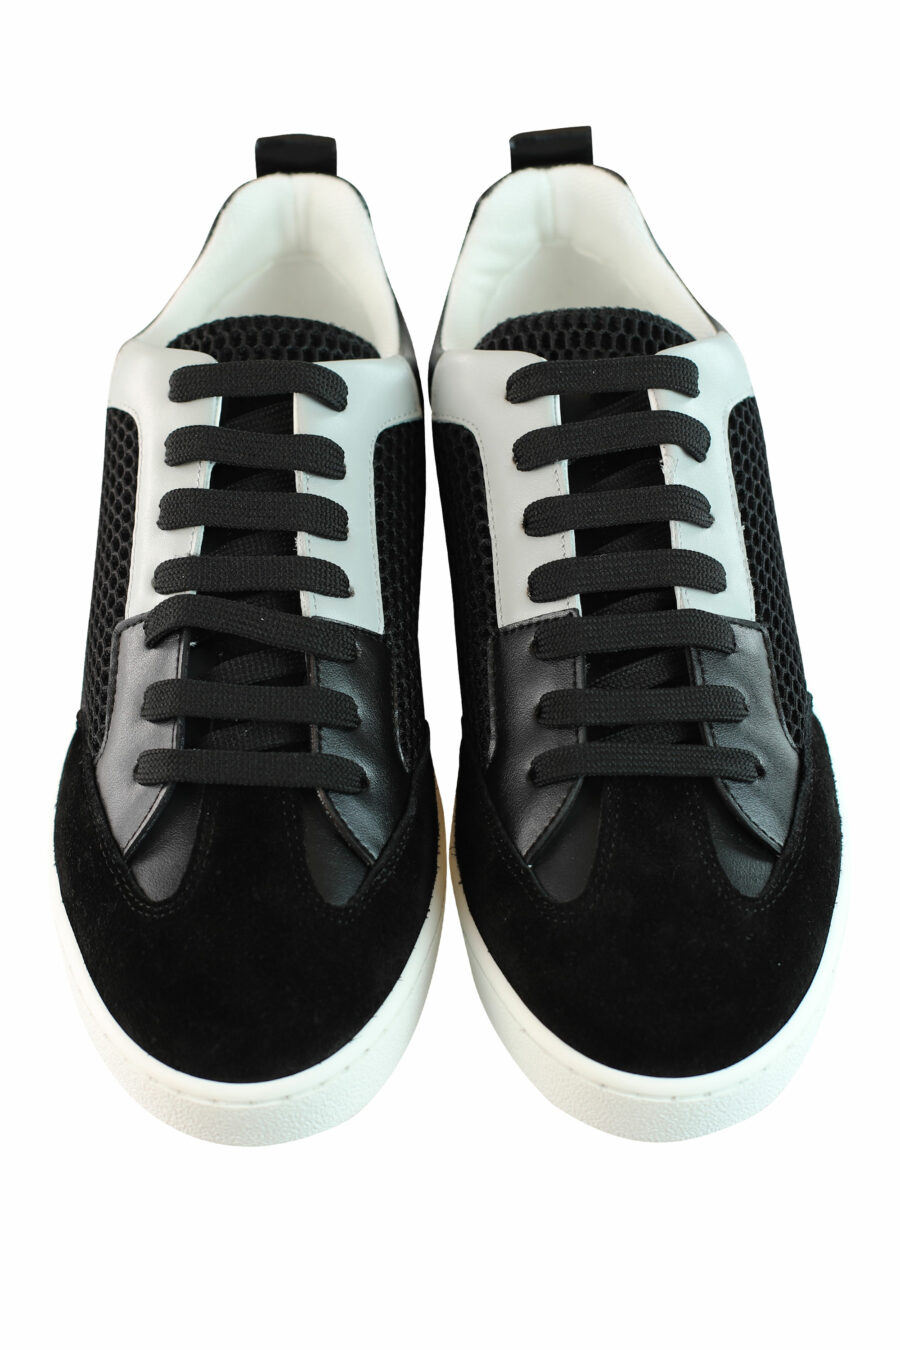 Zapatillas negras con logo en suela "logo25" - IMG 0861